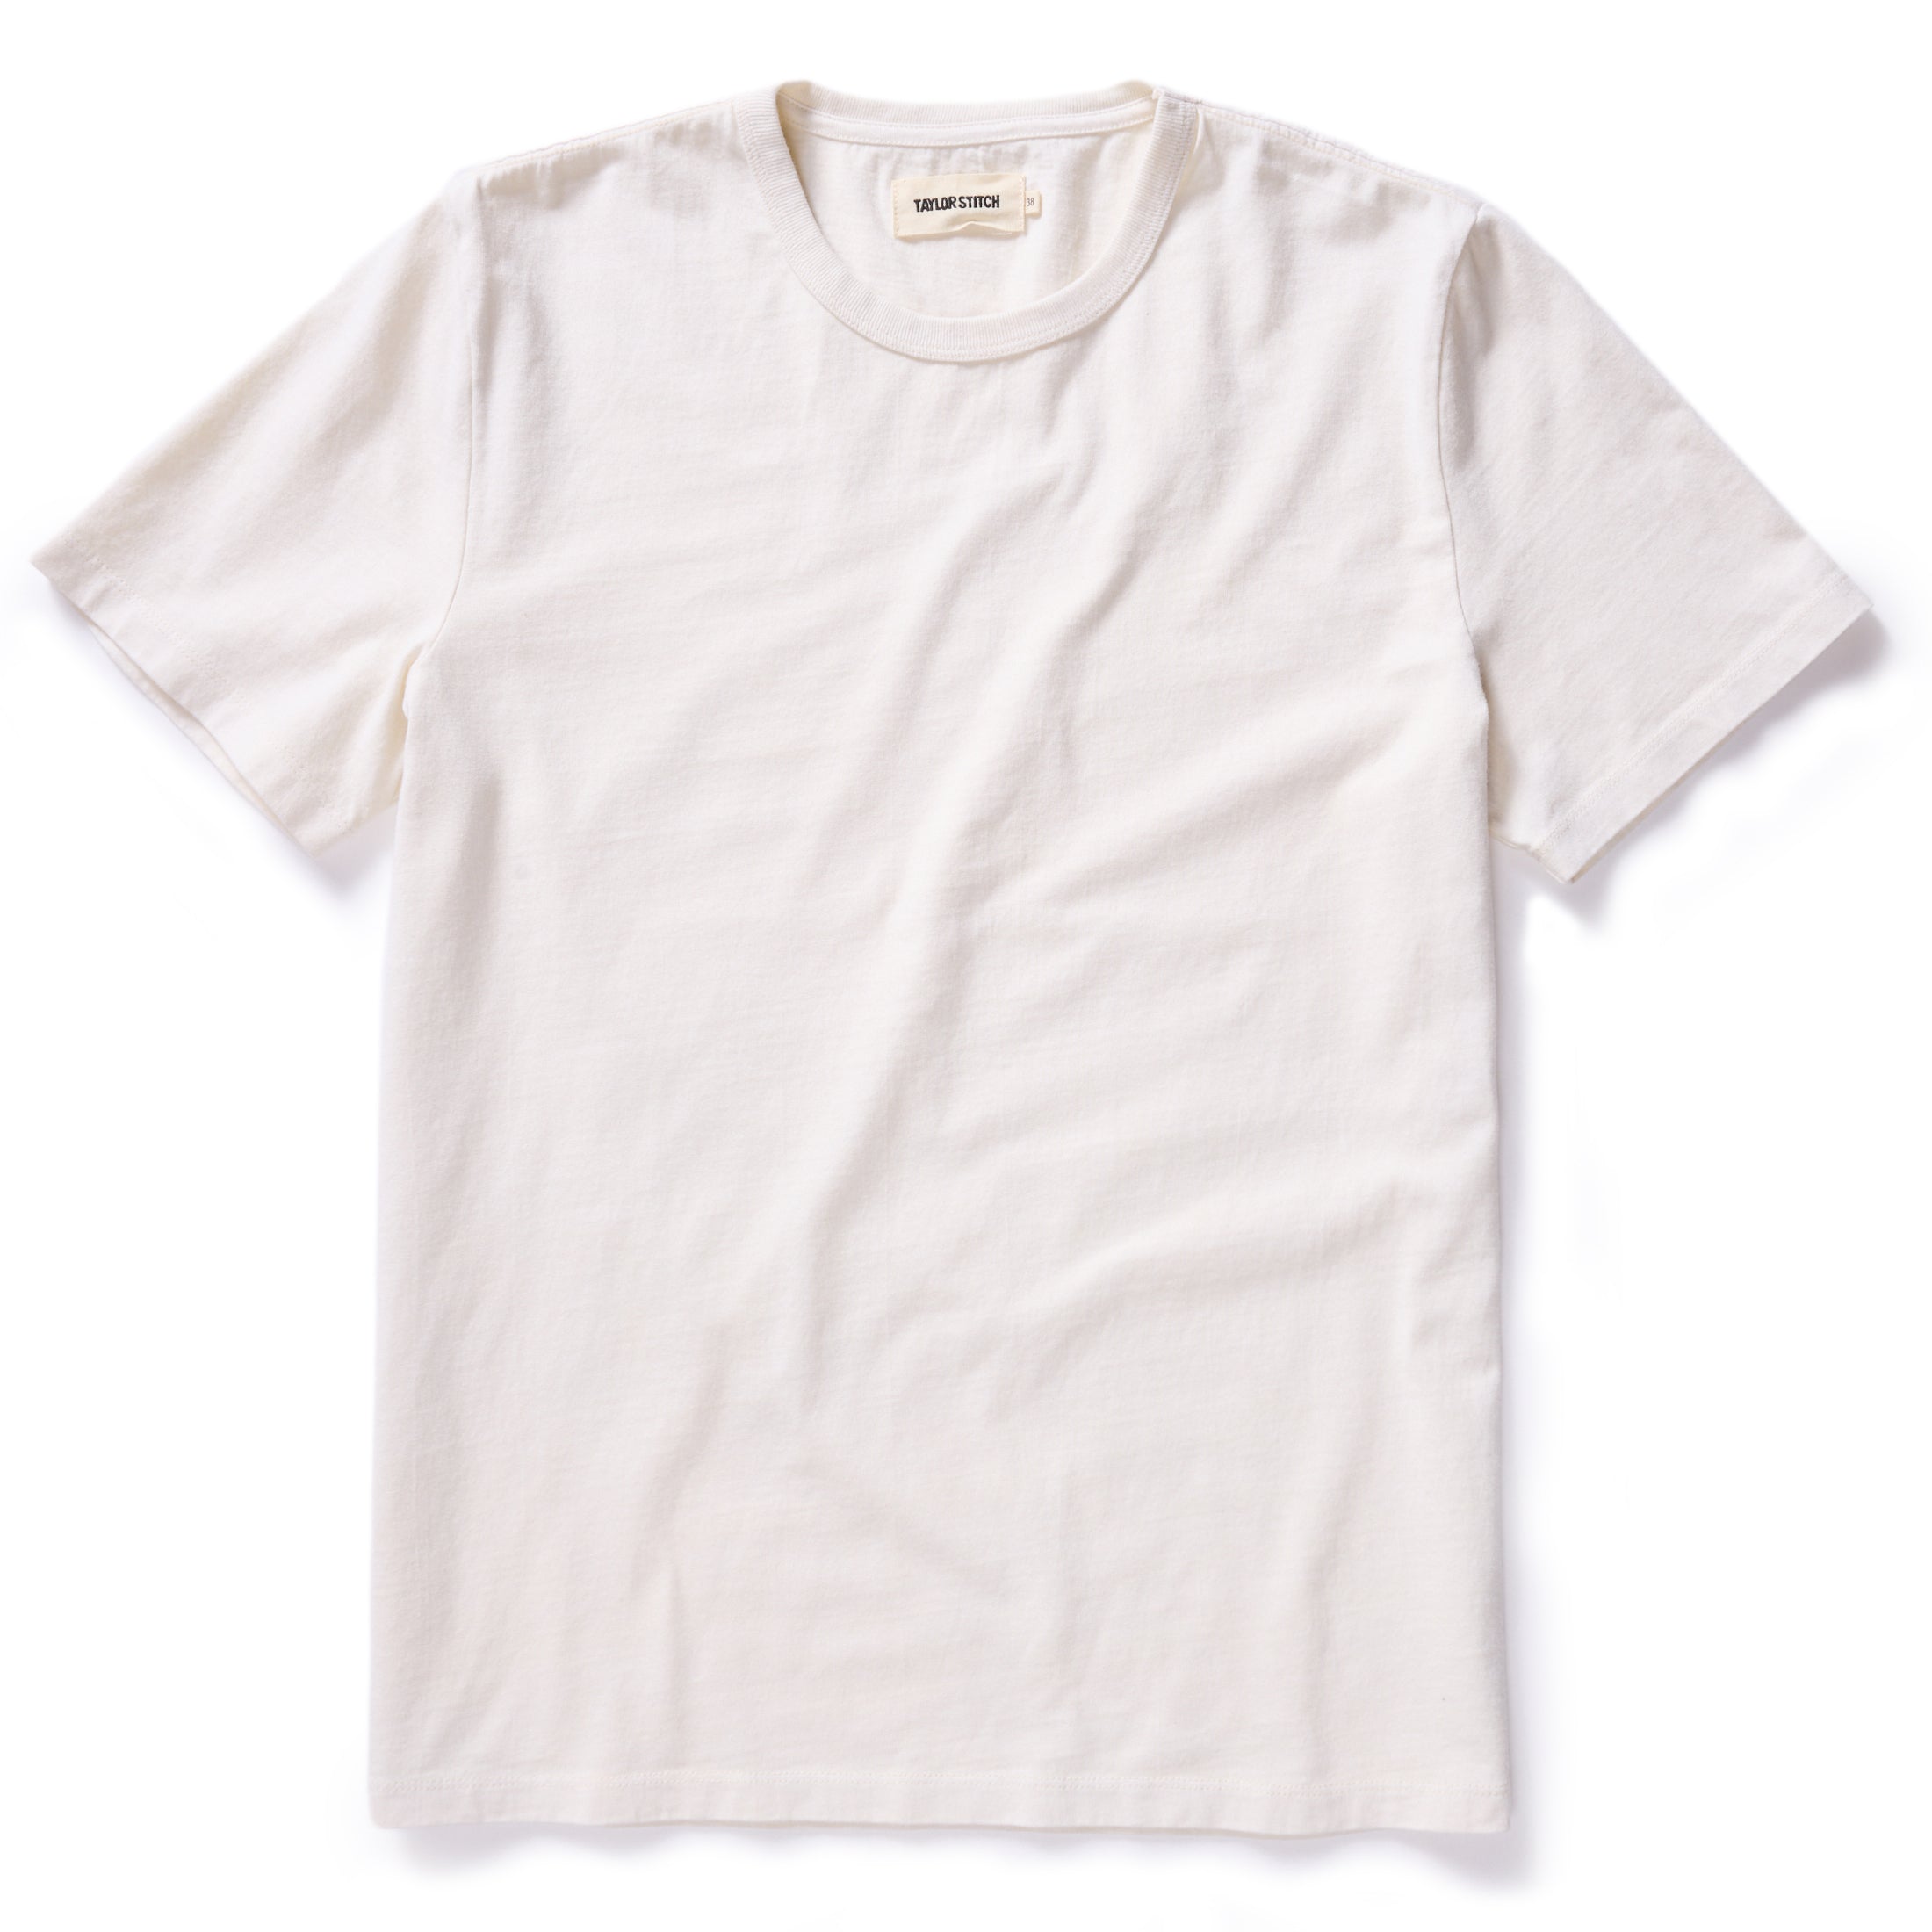 Shop 100% Organic Cotton T-Shirts